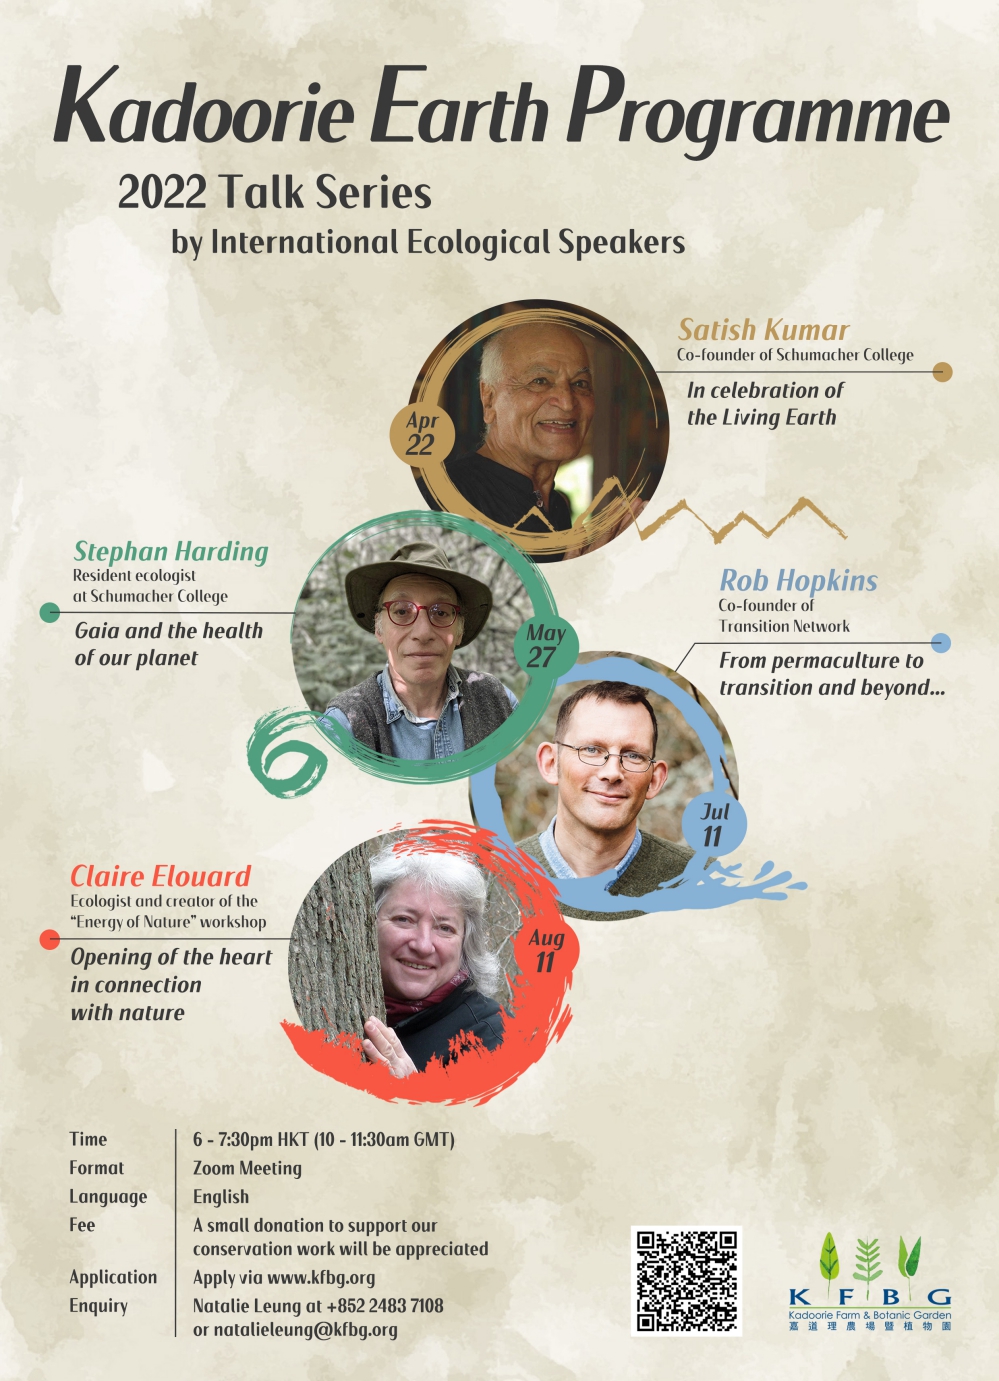 Kadoorie Earth Programme - 2022 Talk series by International Ecological Speakers